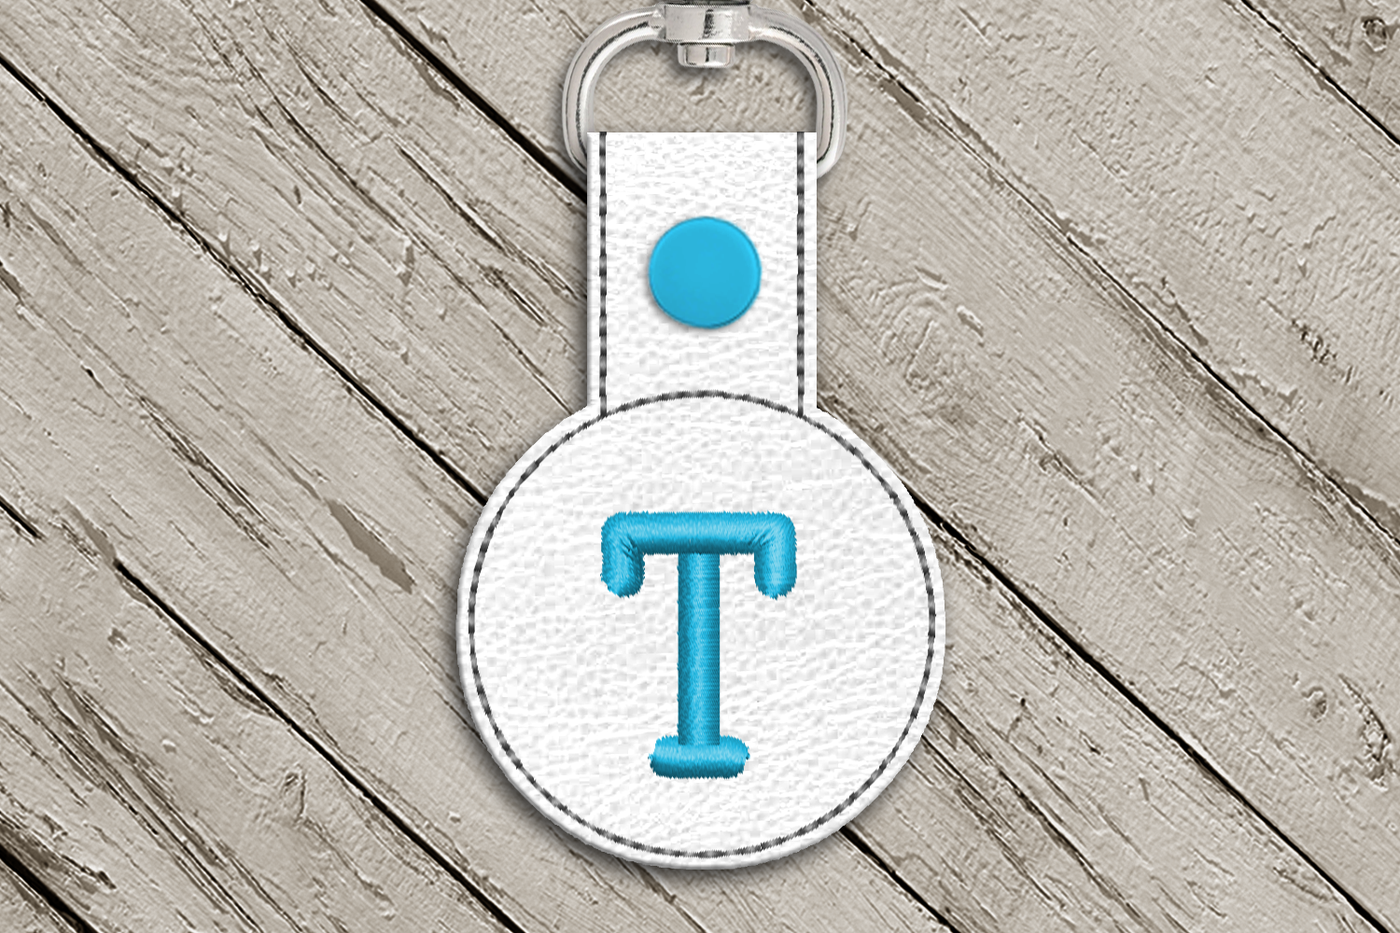 Letter T in the hoop key fob design